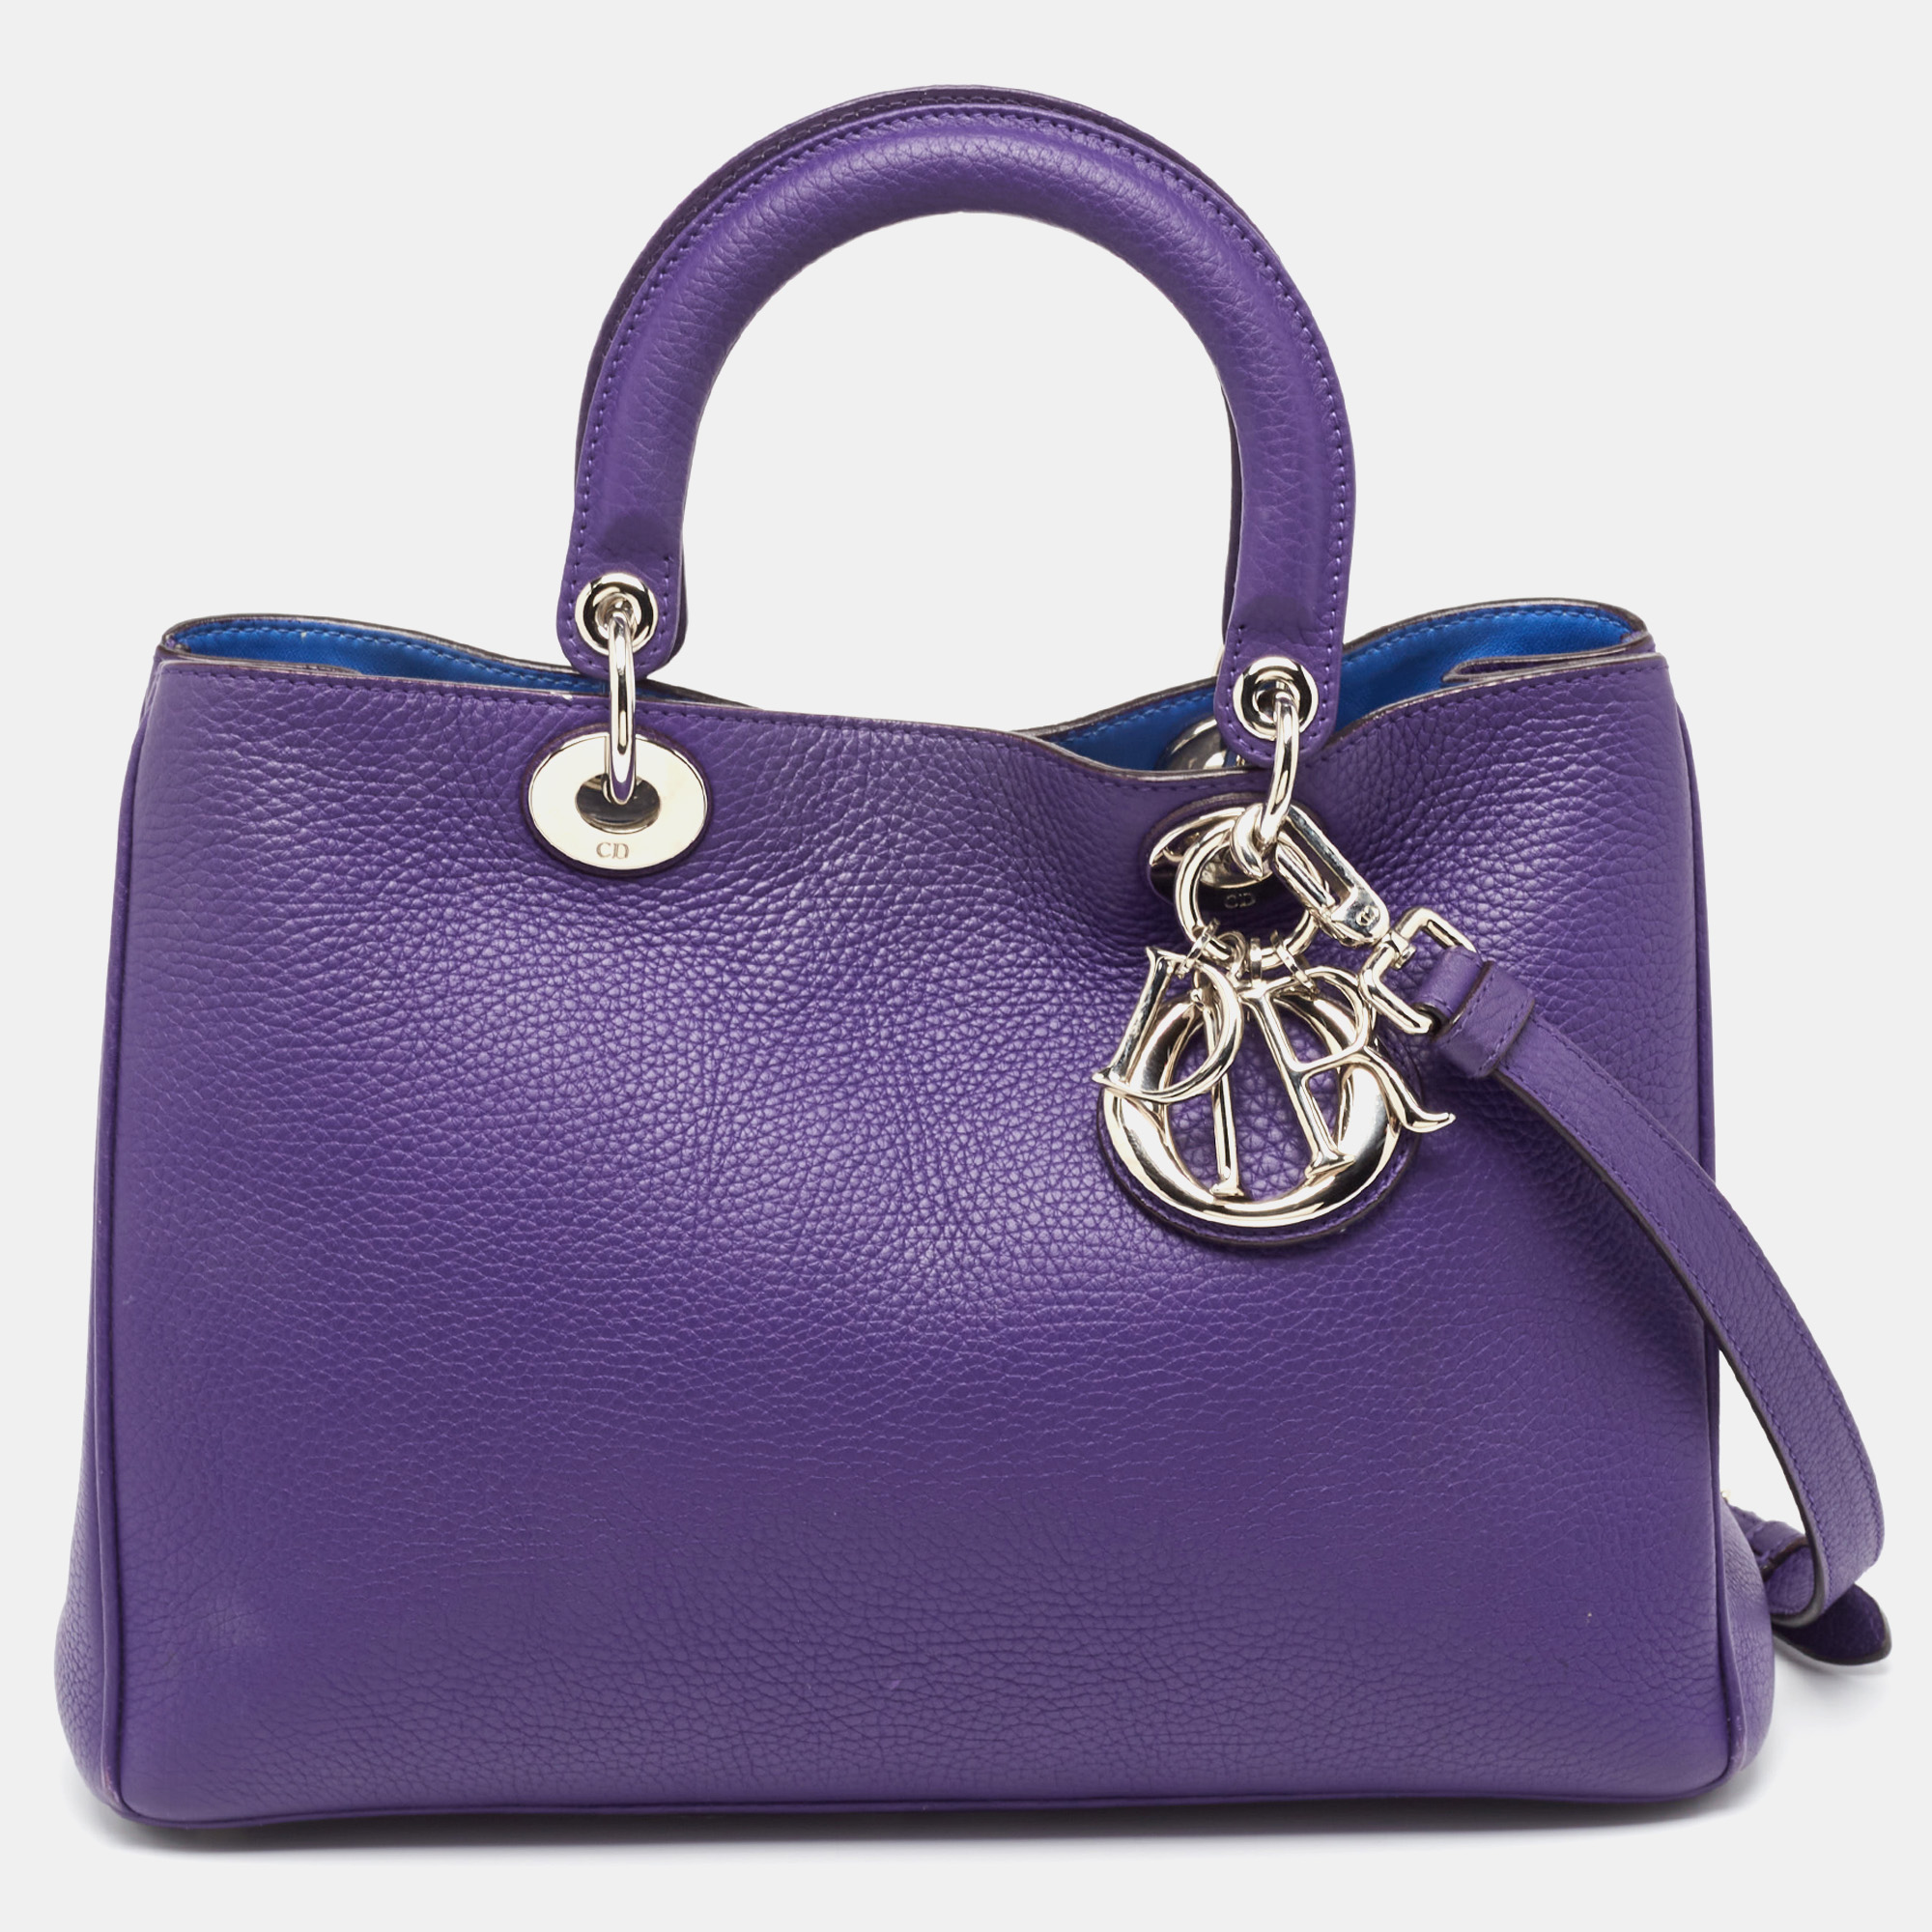 Dior ultra violet leather medium diorissimo shopper tote